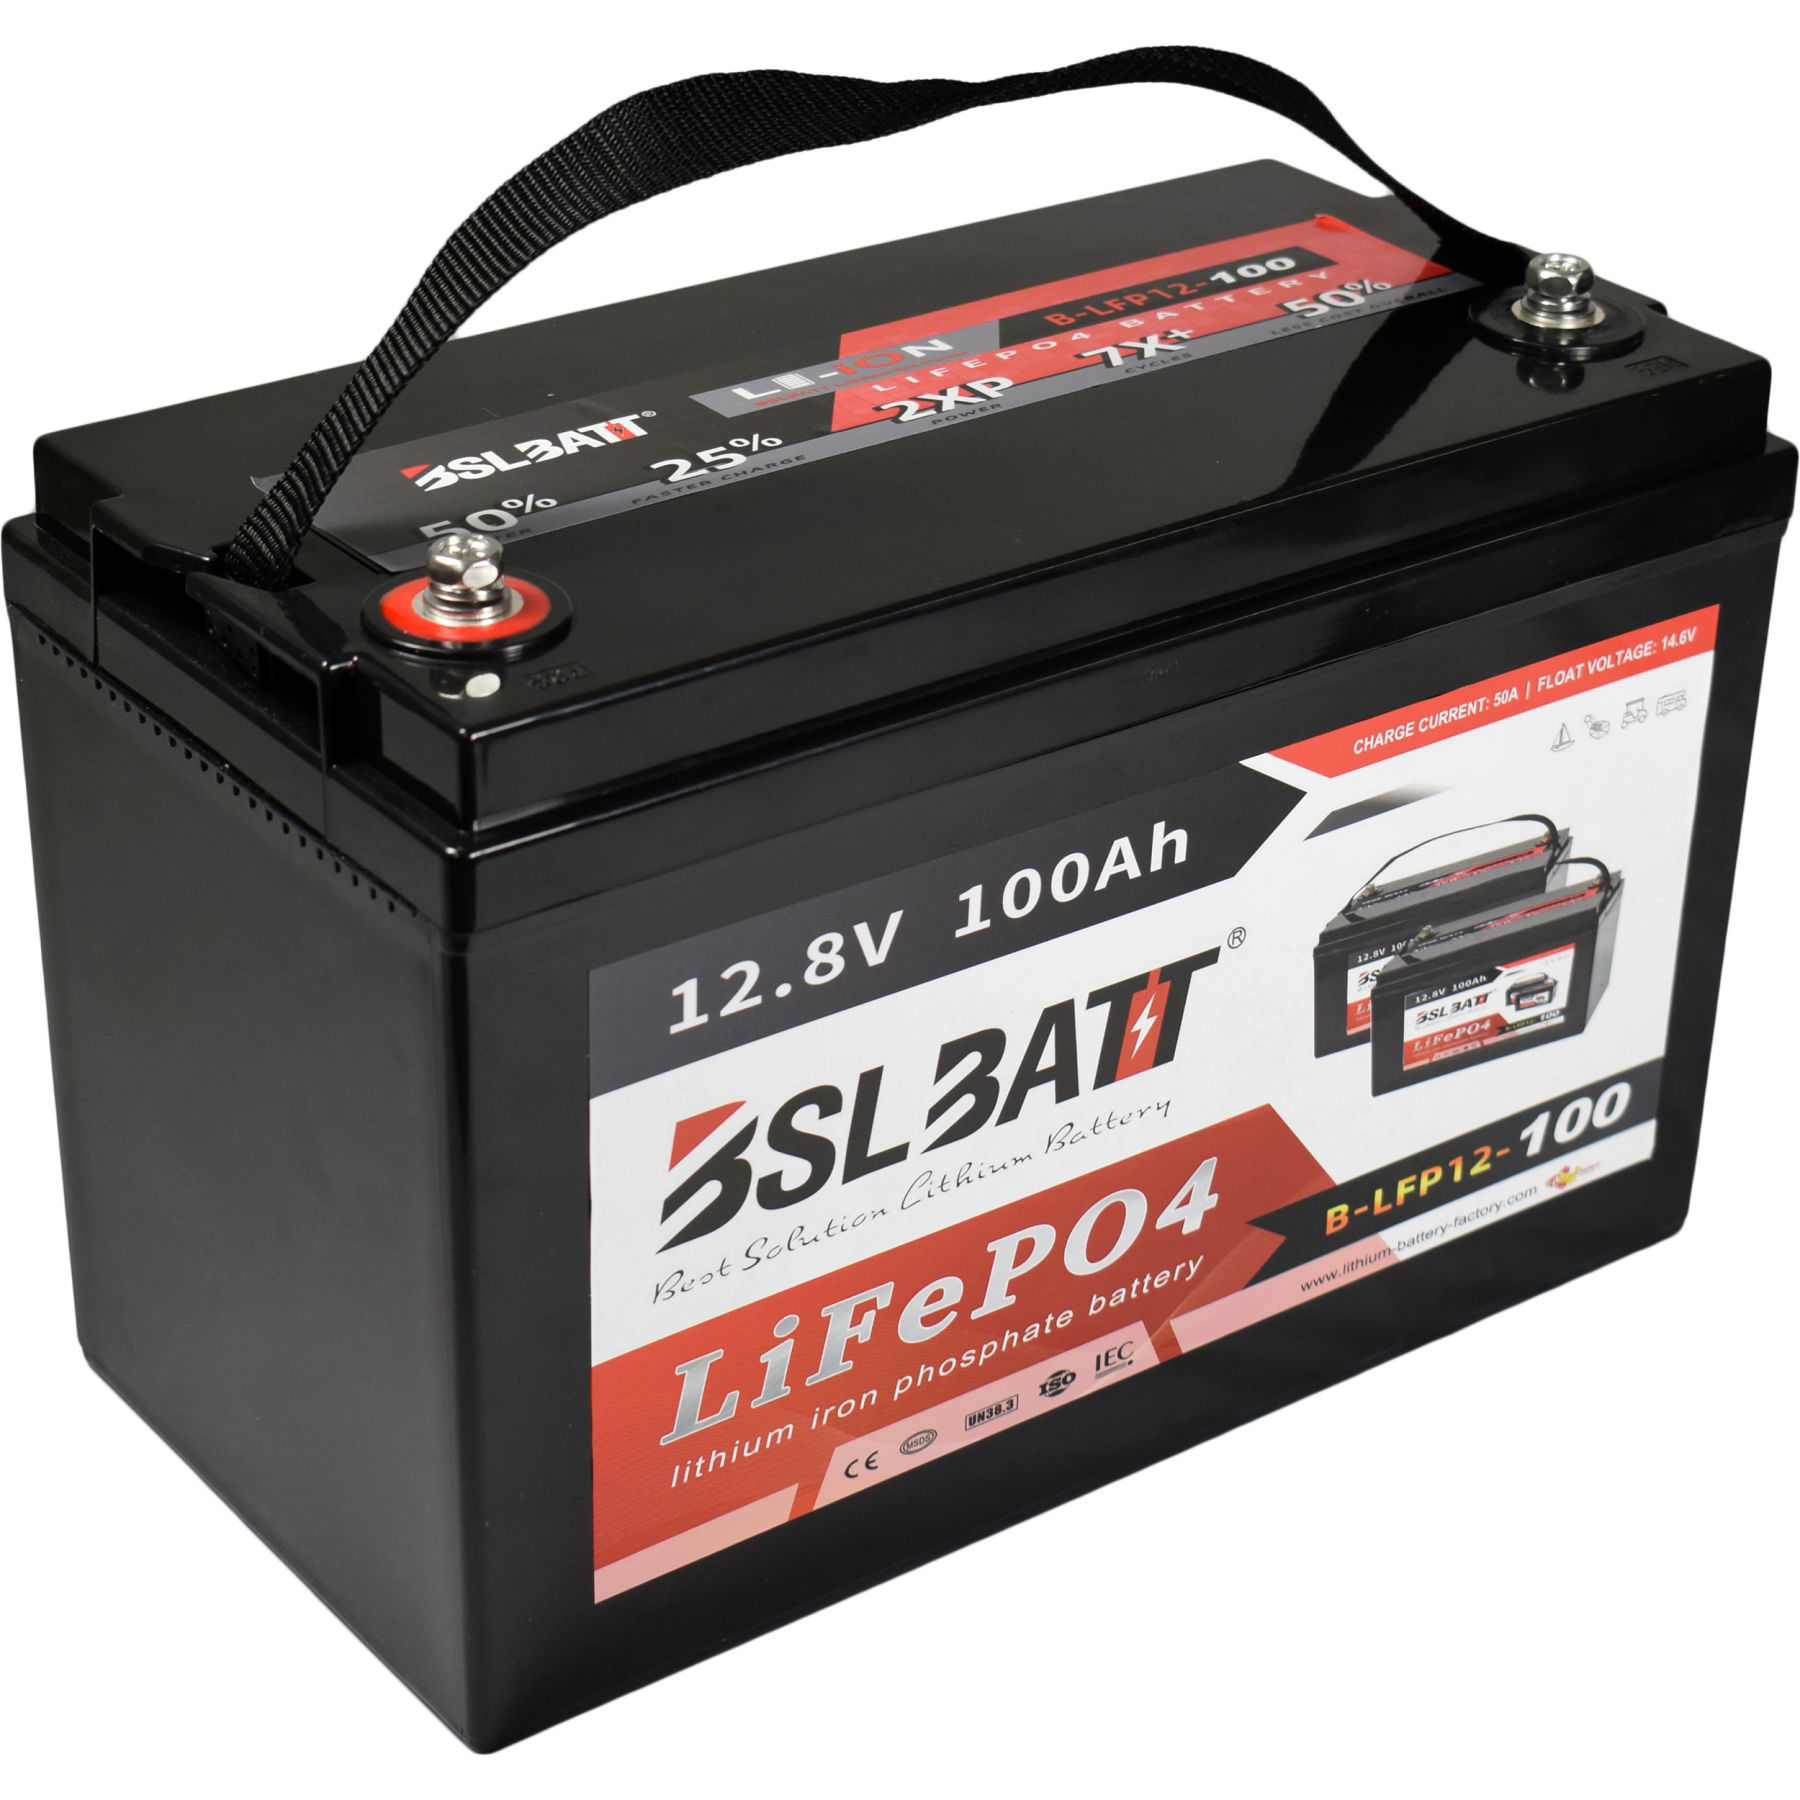 B-LFP12-100: BSLBATT 12.8v 100 AH 1280 Wh Deep Cycle Lithium LiFePO4 Battery